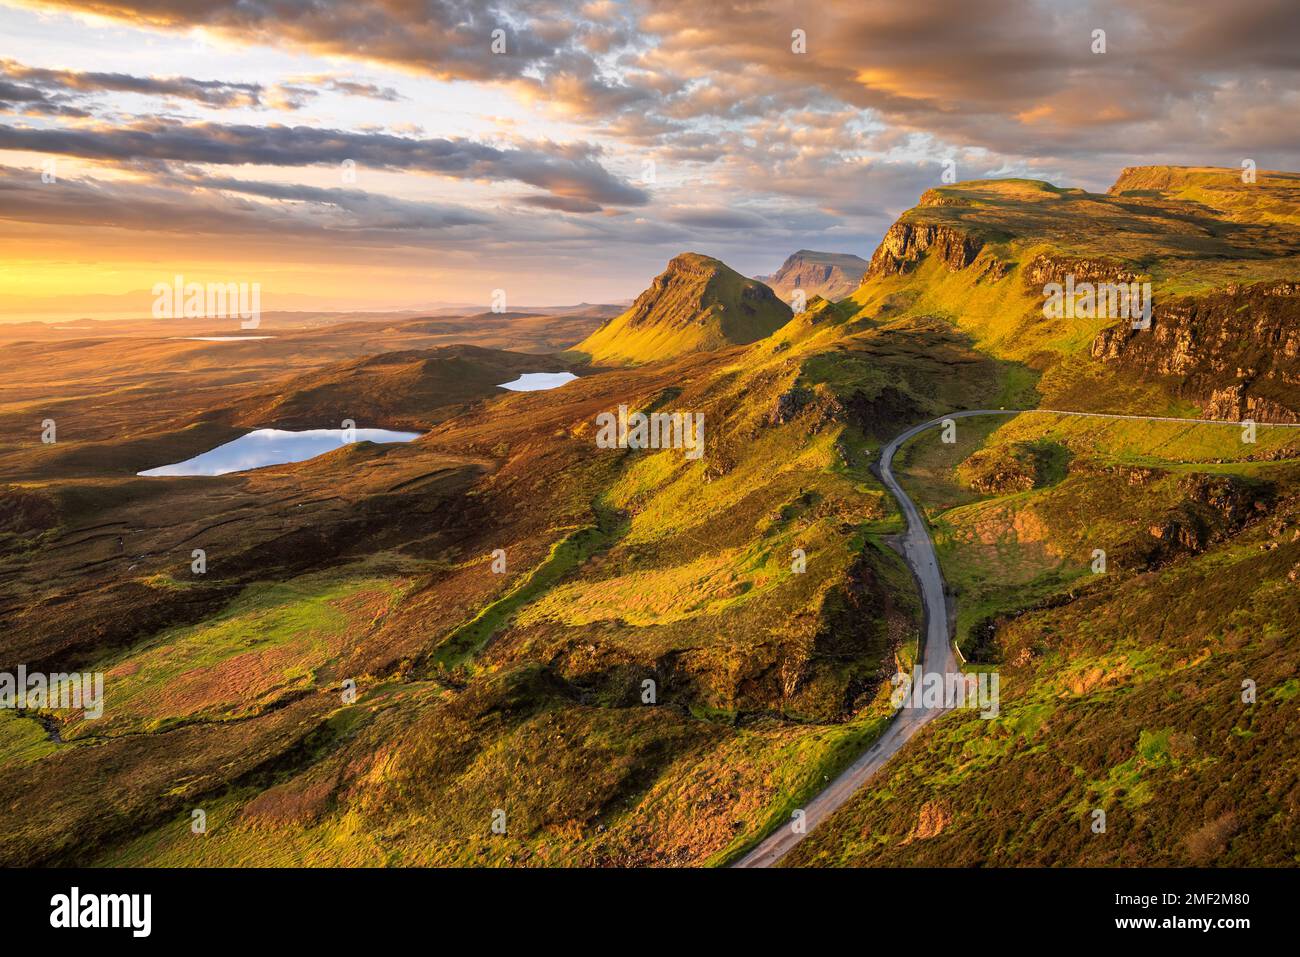 Wunderschöner Sonnenaufgang in Quiraing, Isle of Skye, Schottland, Großbritannien. Stockfoto